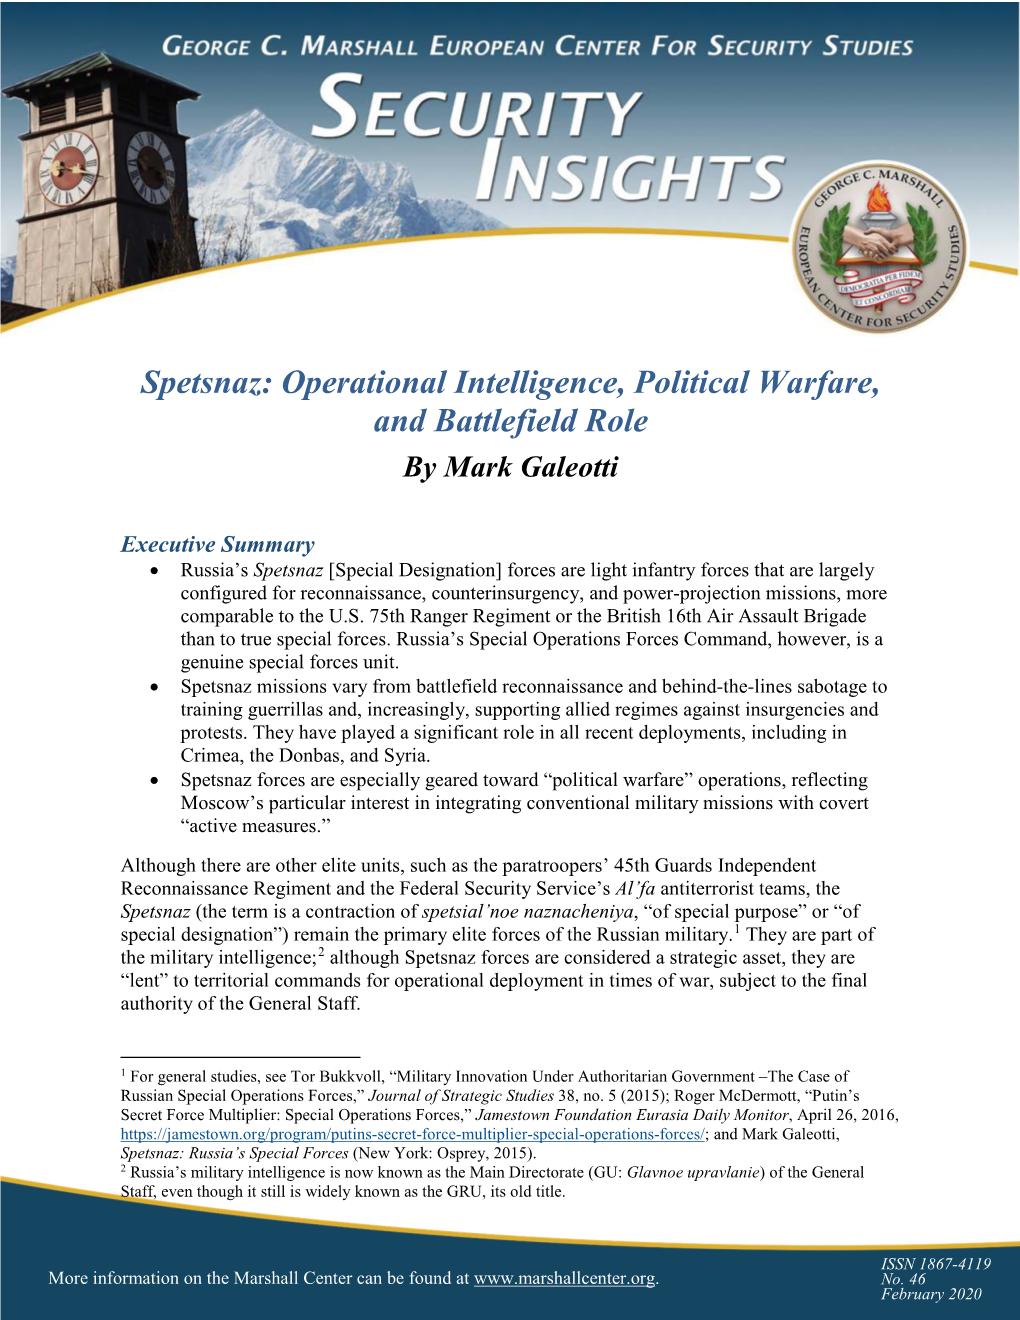 Spetsnaz: Operational Intelligence, Political Warfare, and Battlefield Role by Mark Galeotti